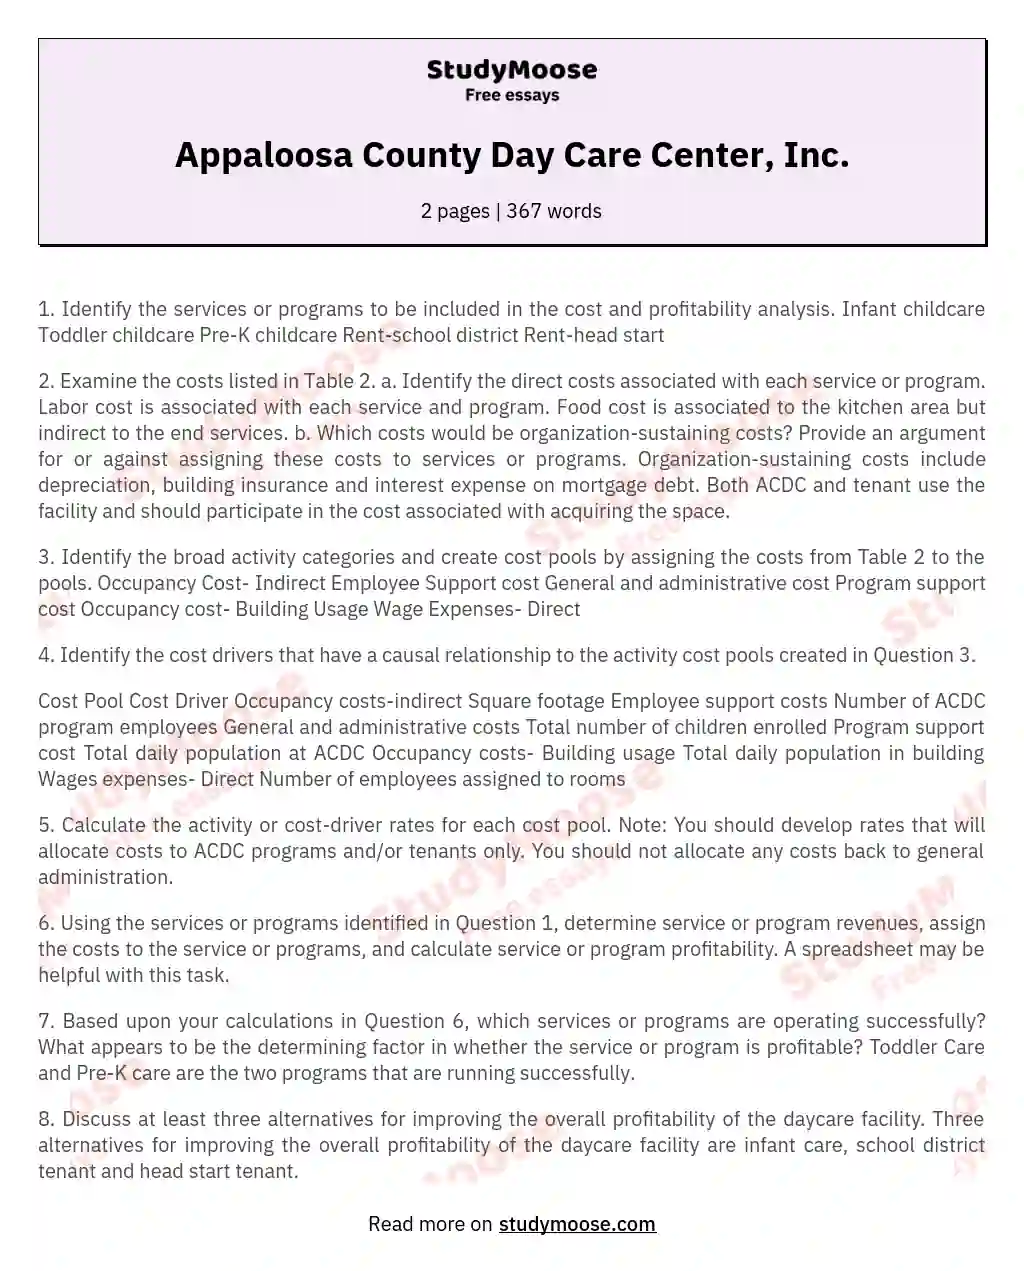 Appaloosa County Day Care Center, Inc. essay